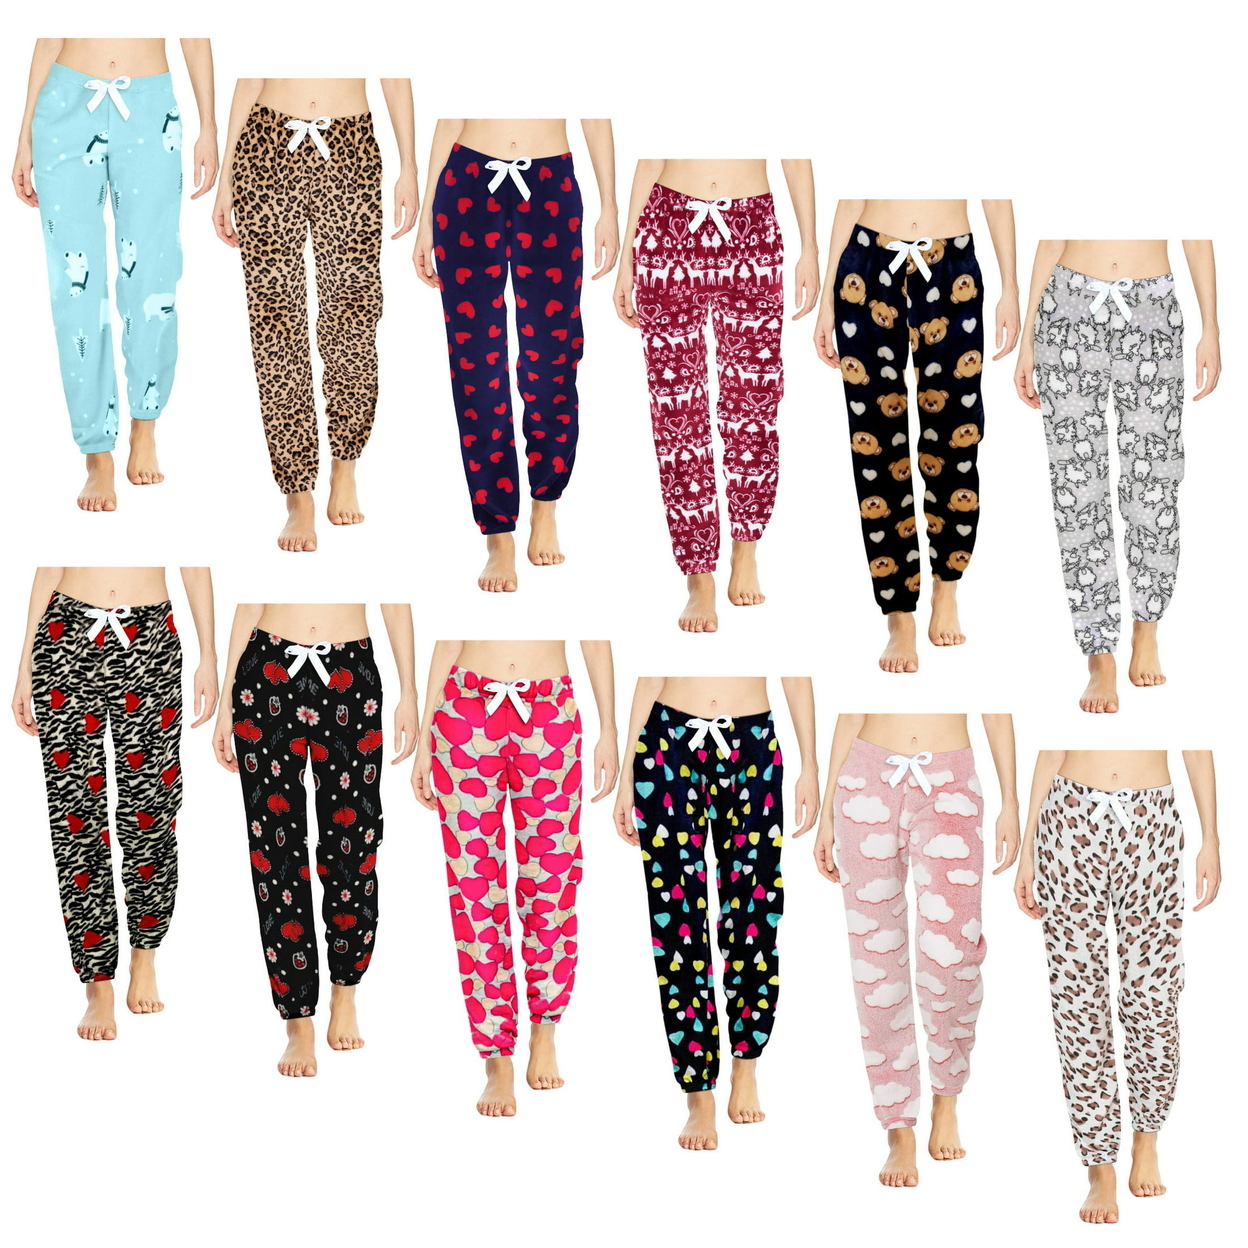 4-Pack: Women's Printed Ultra-Soft Comfy Stretch Micro-Fleece Pajama Lounge Pants - Large, Love